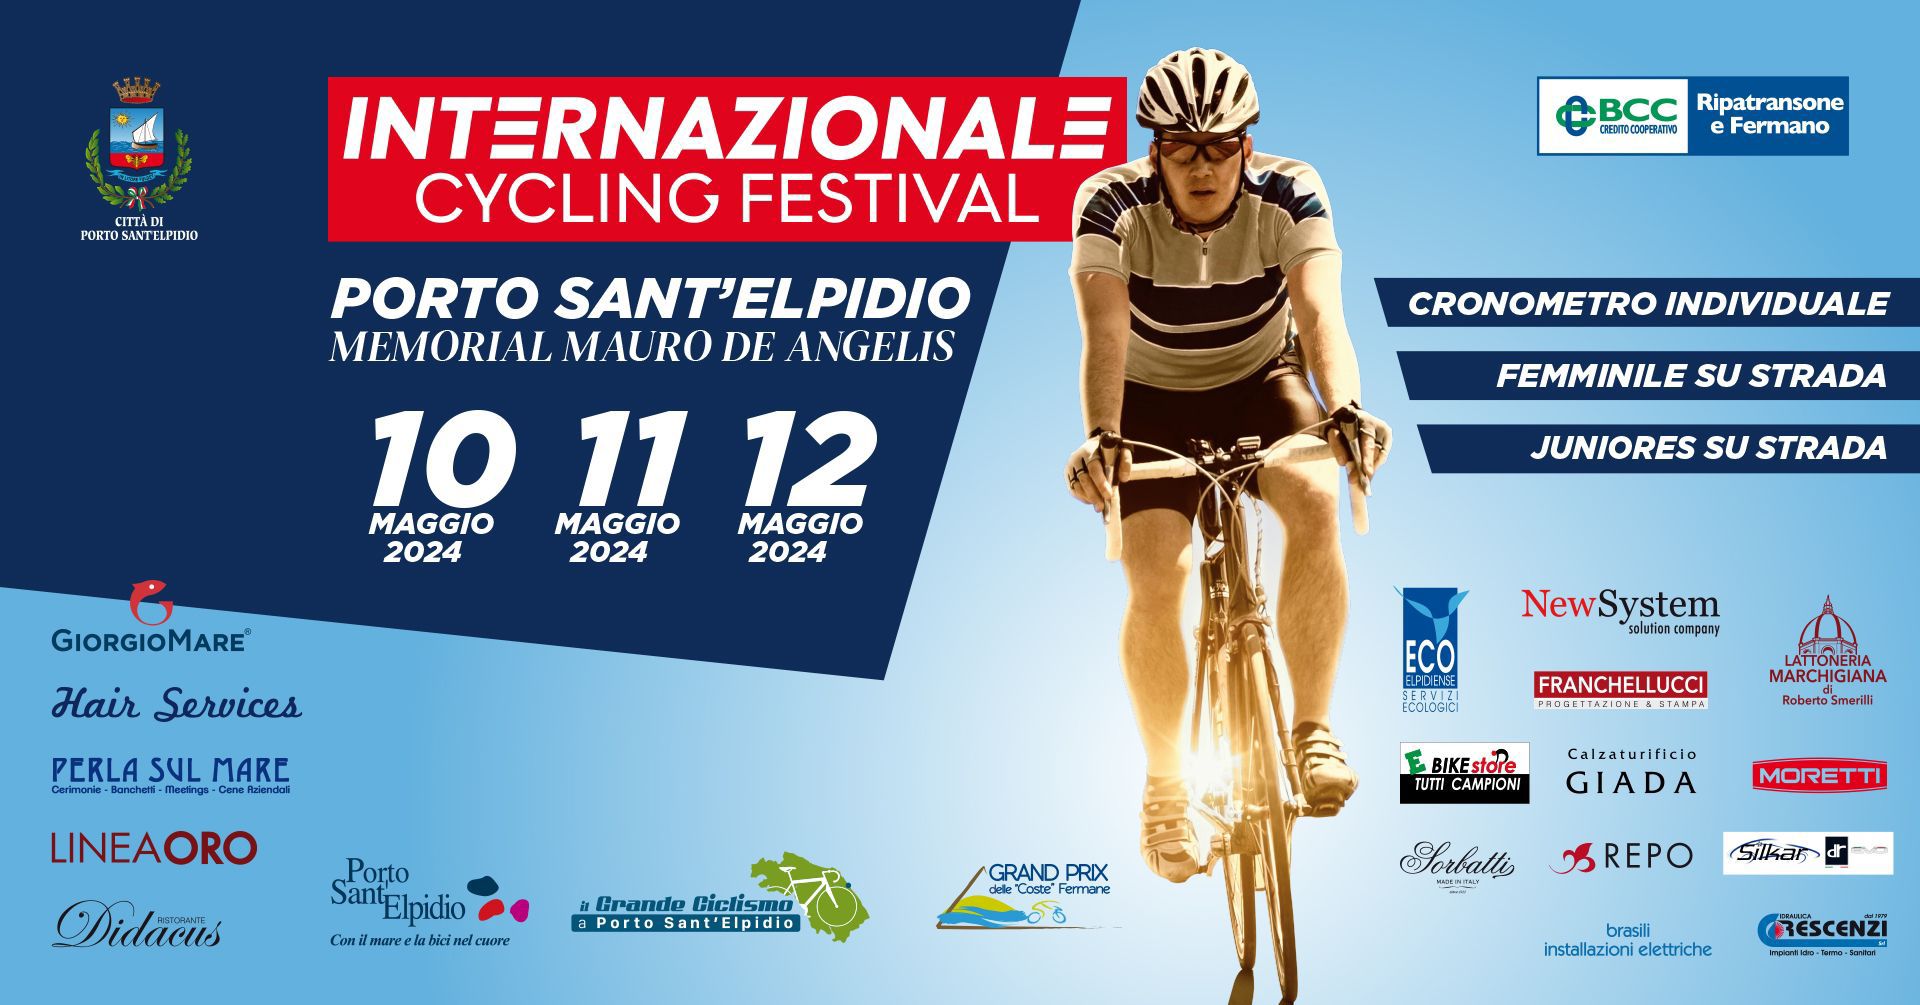 Internazionale Cycling Festival